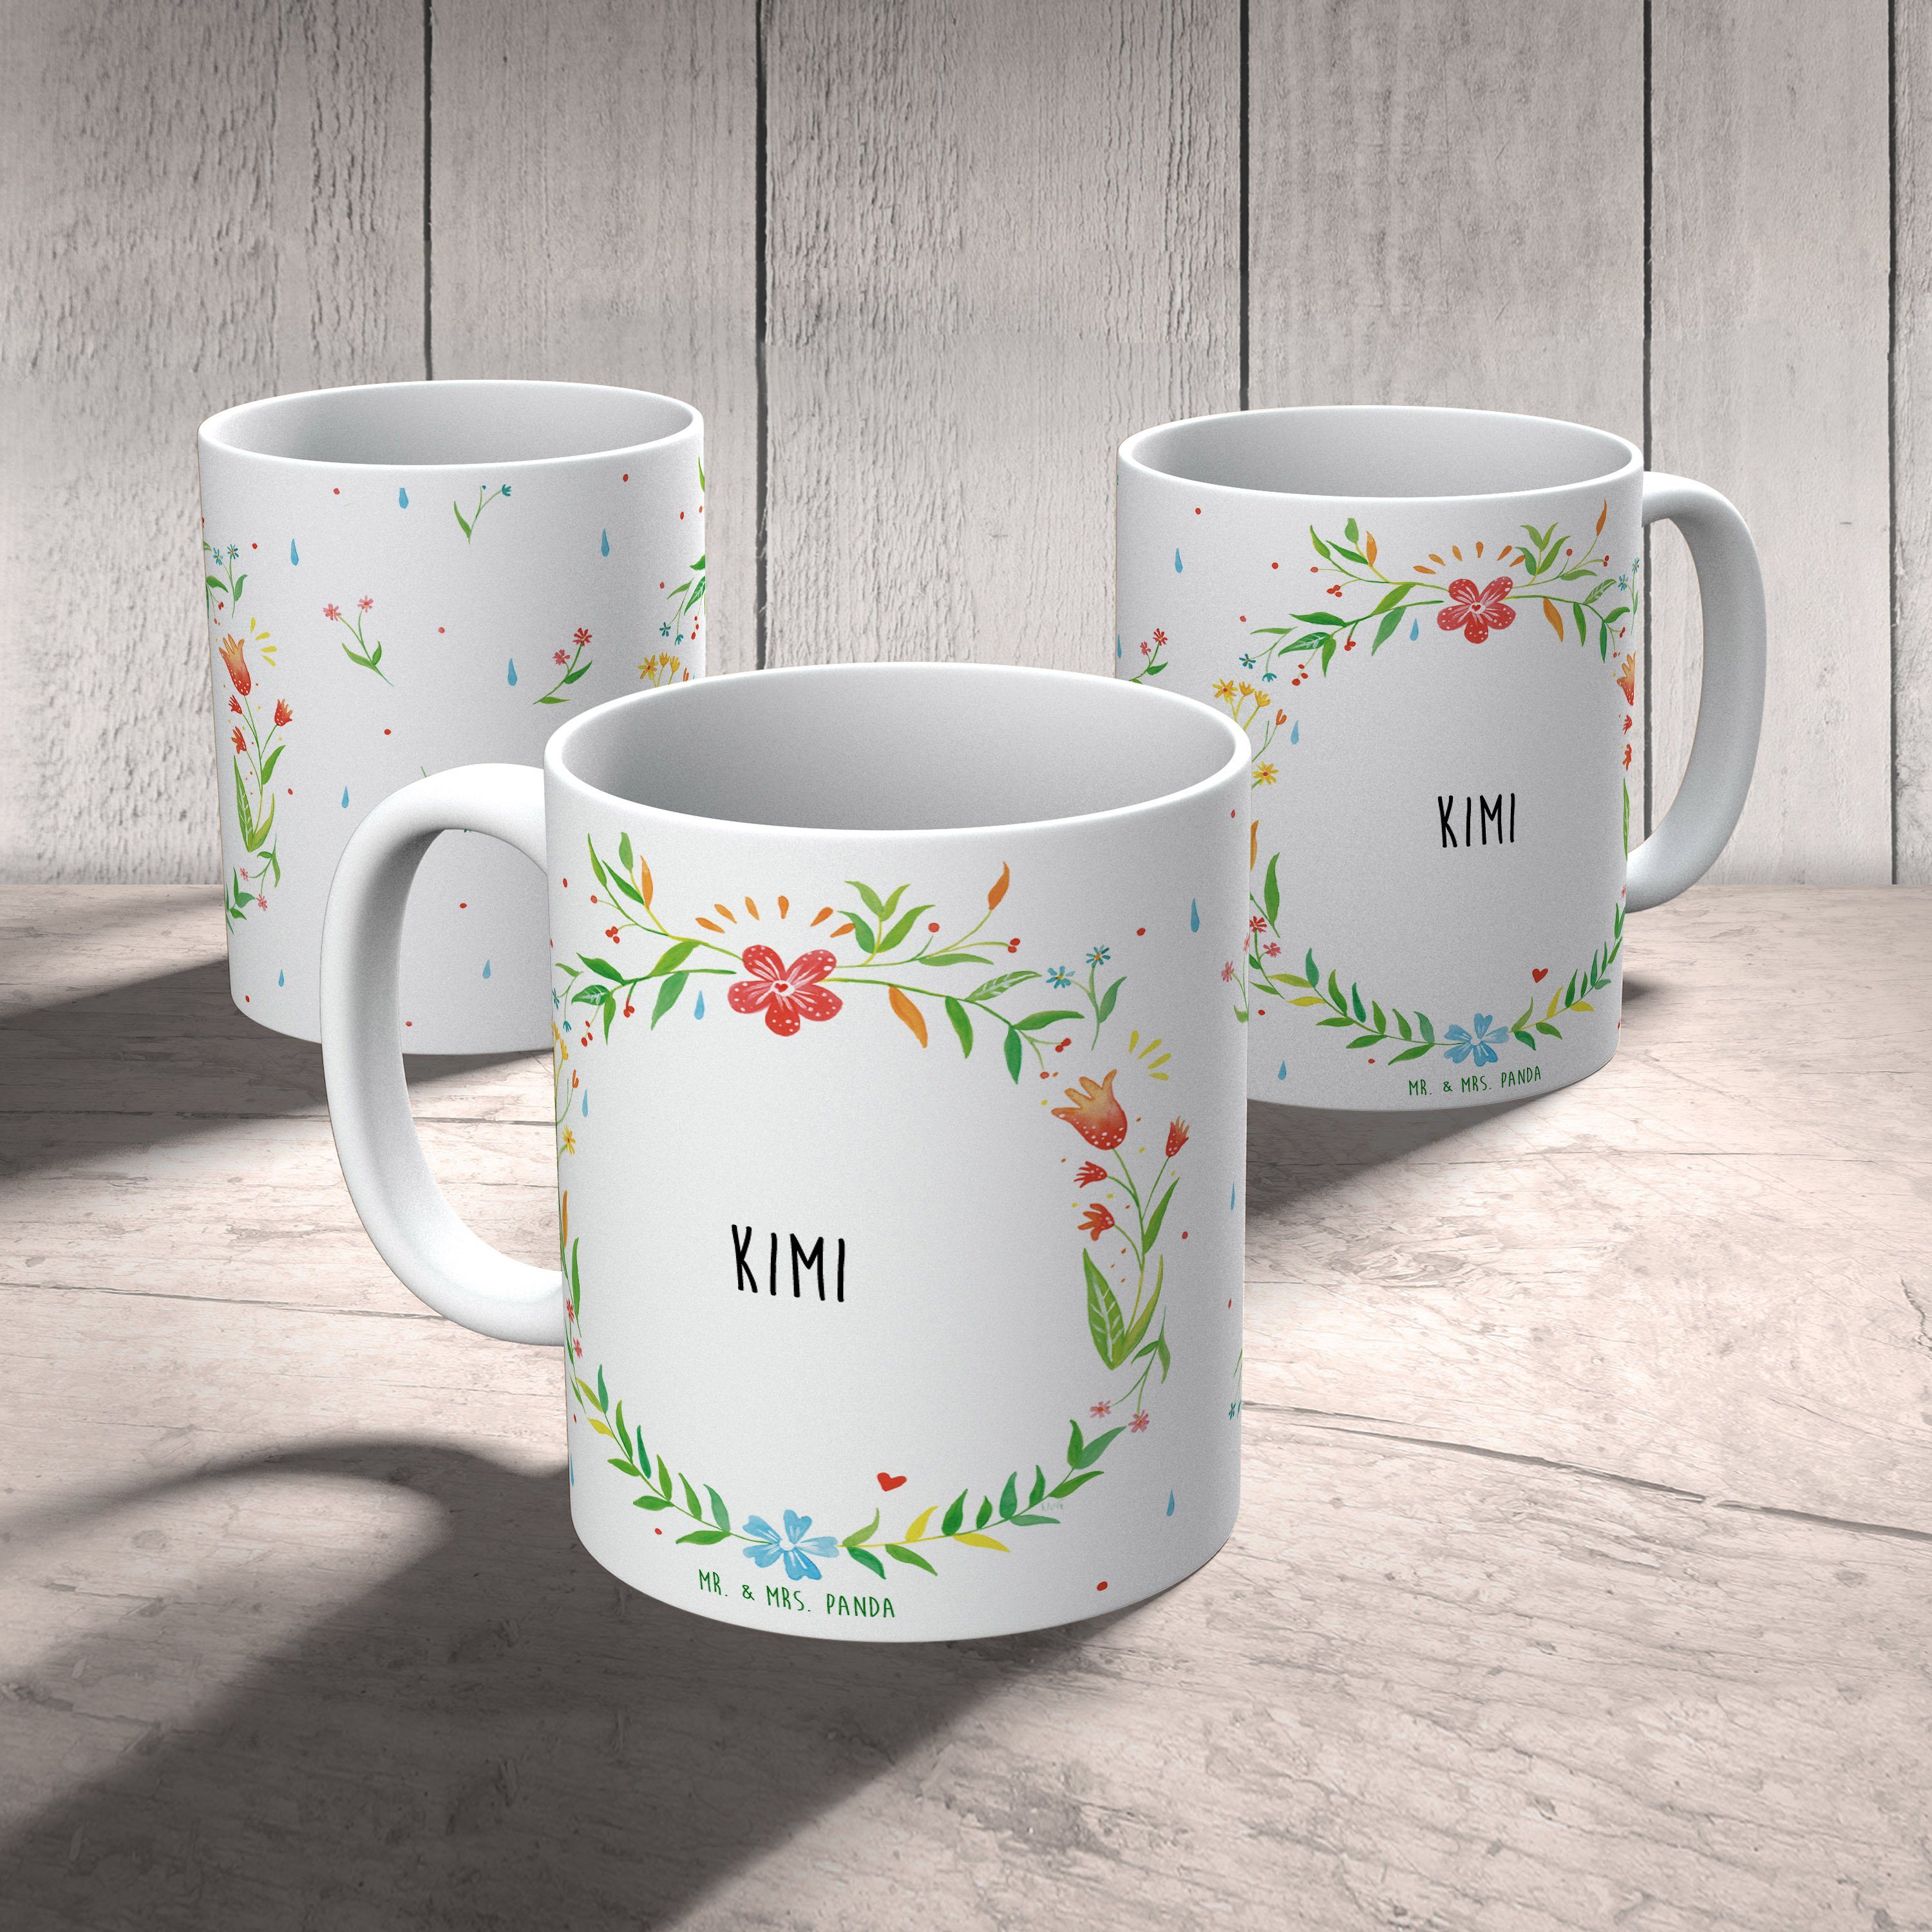 Mrs. Mr. Tasse - Geschenk Keramik Kimi Teetass, Tasse, & Porzellantasse, Panda Kaffeetasse, Geschenk,